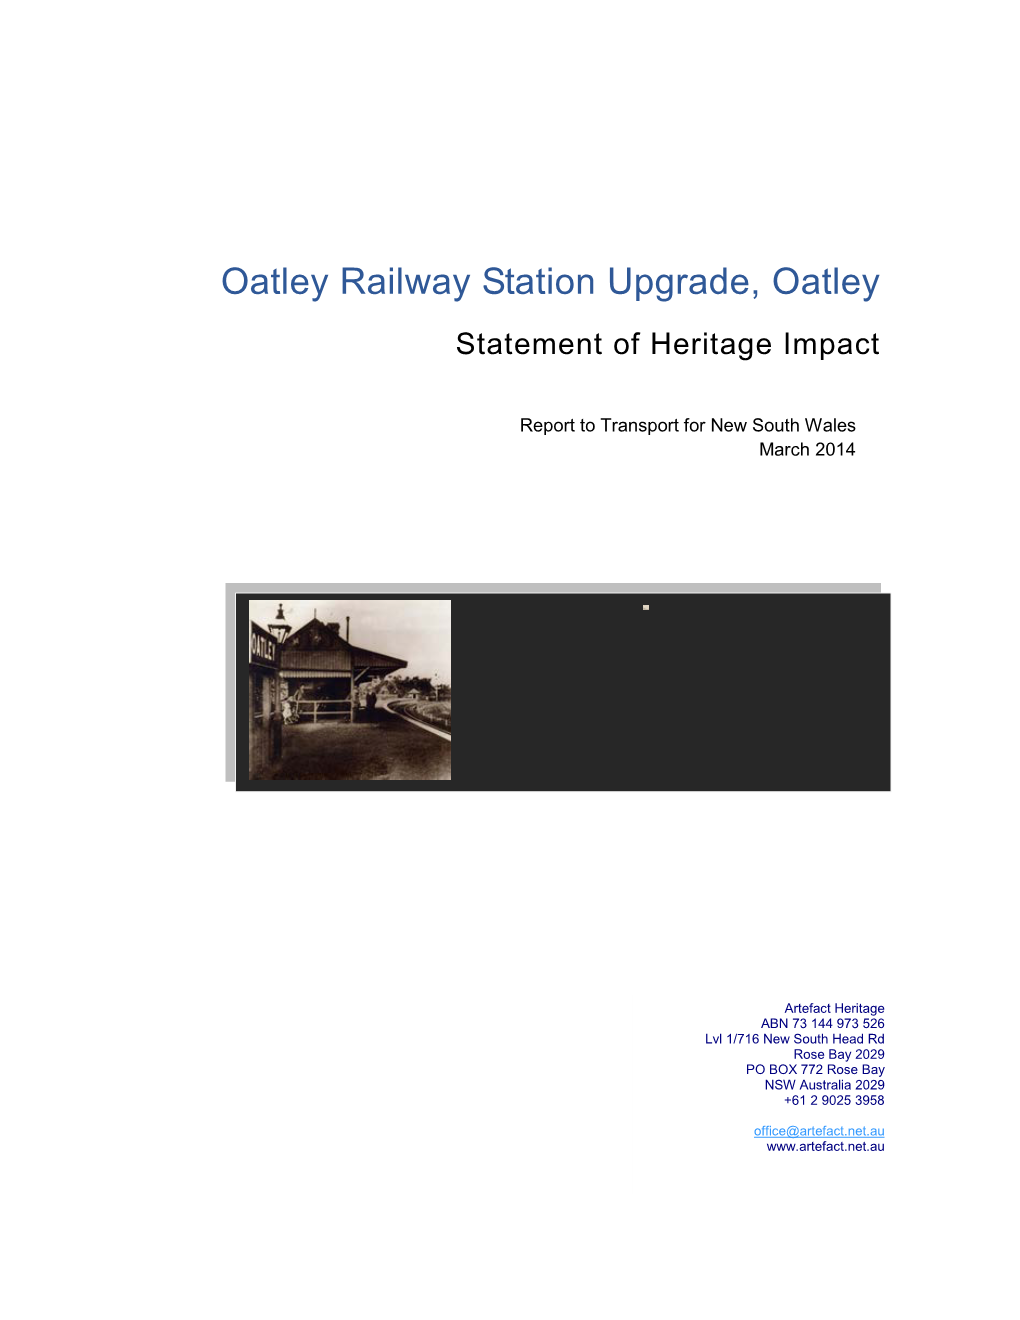 Oatley Railway Station Upgrade Statement of Heritage Impact